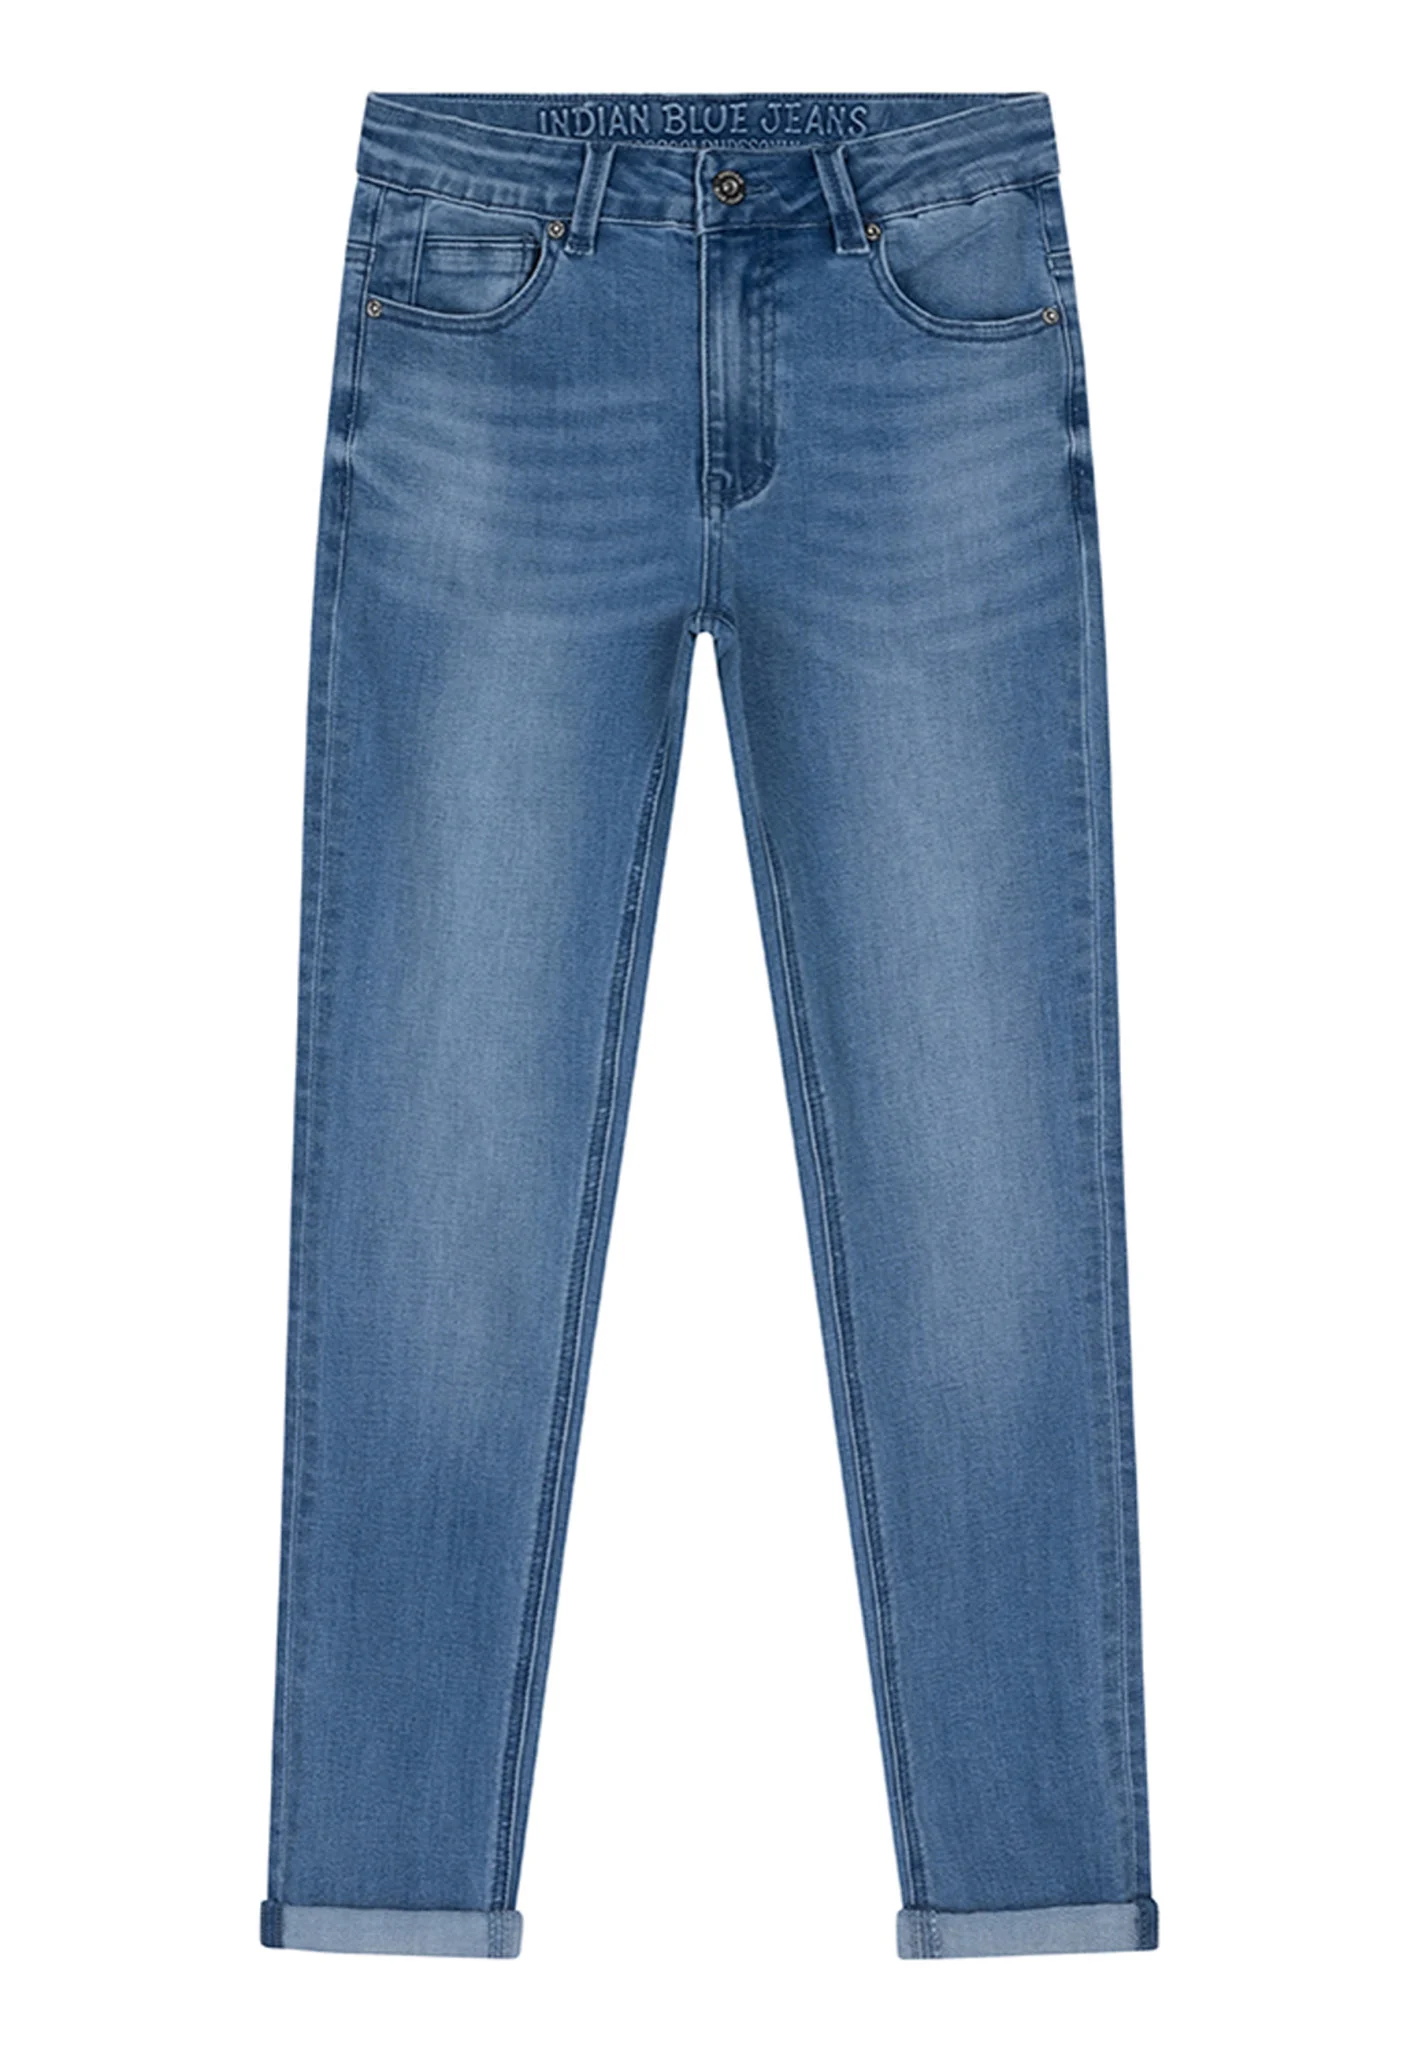 Afbeelding van Indian Blue Jongens jeans jay tapered fit medium